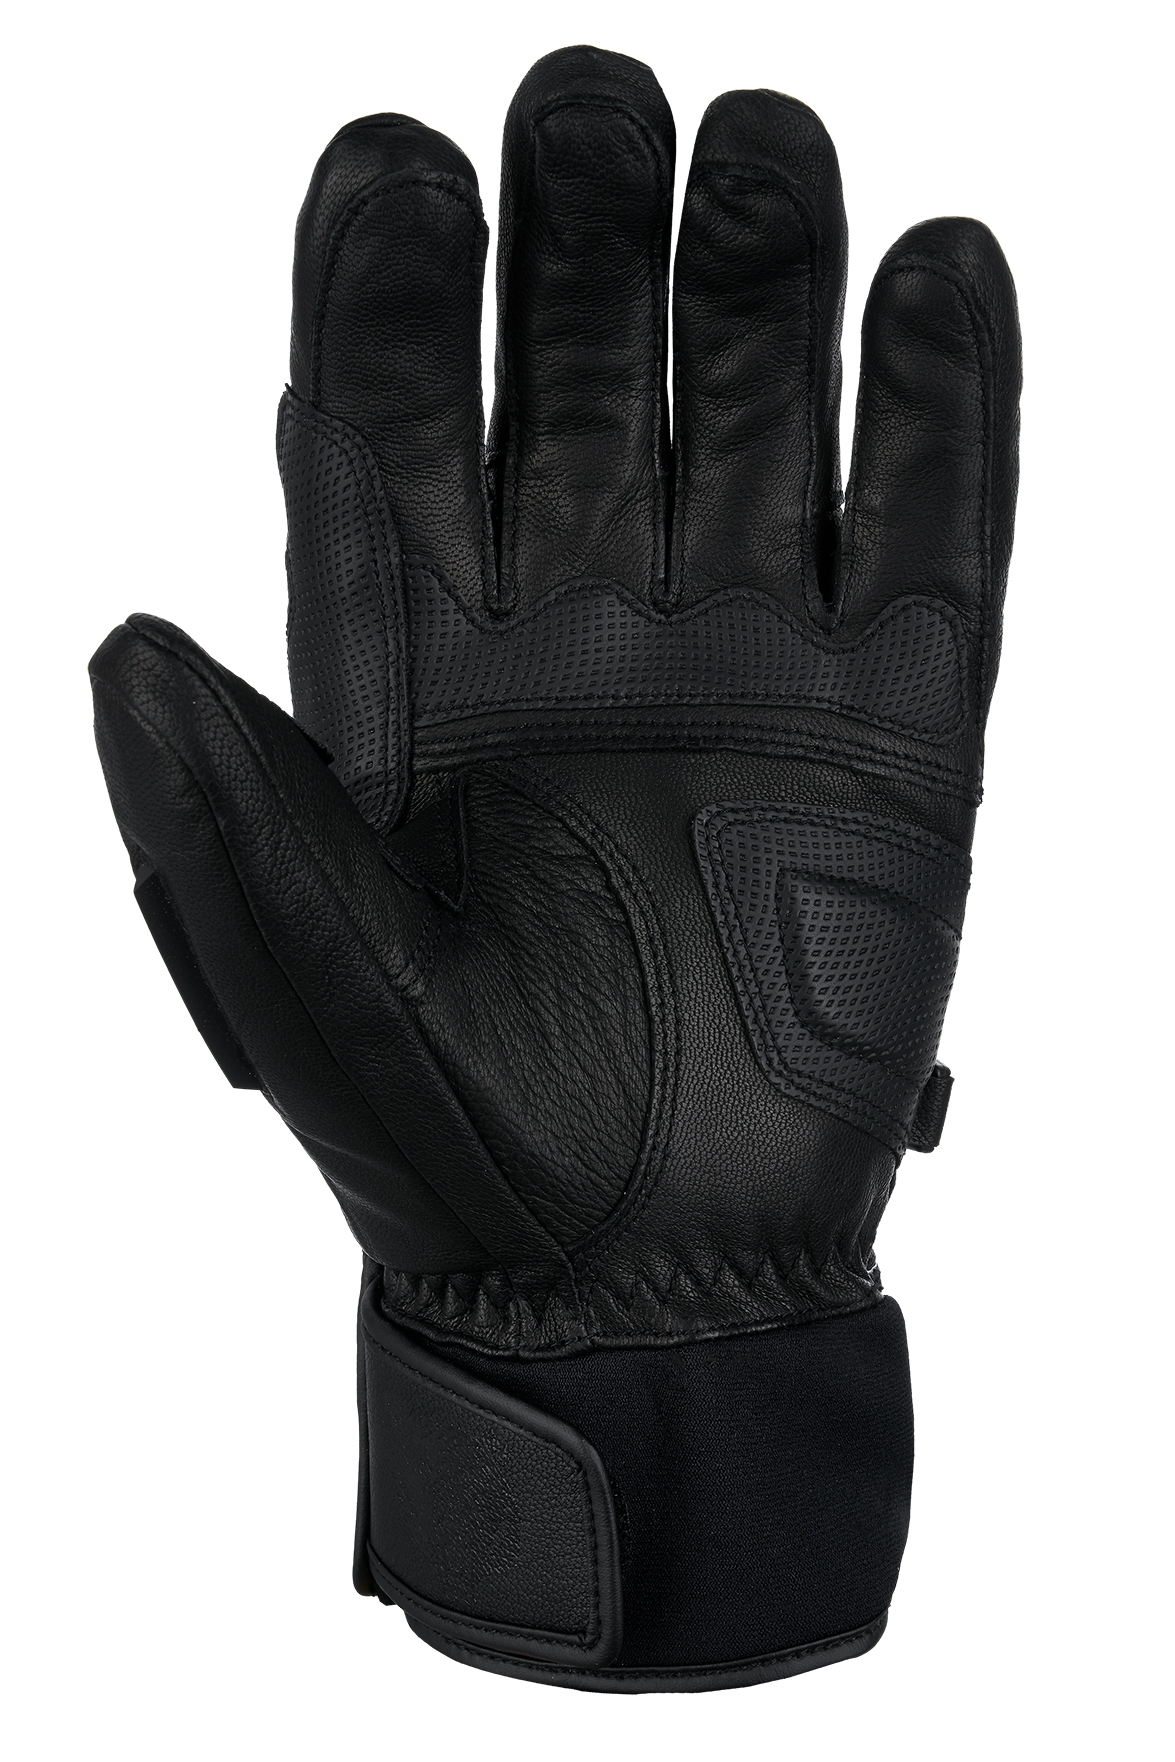 фото Перчатки terror 21-22 race gloves black